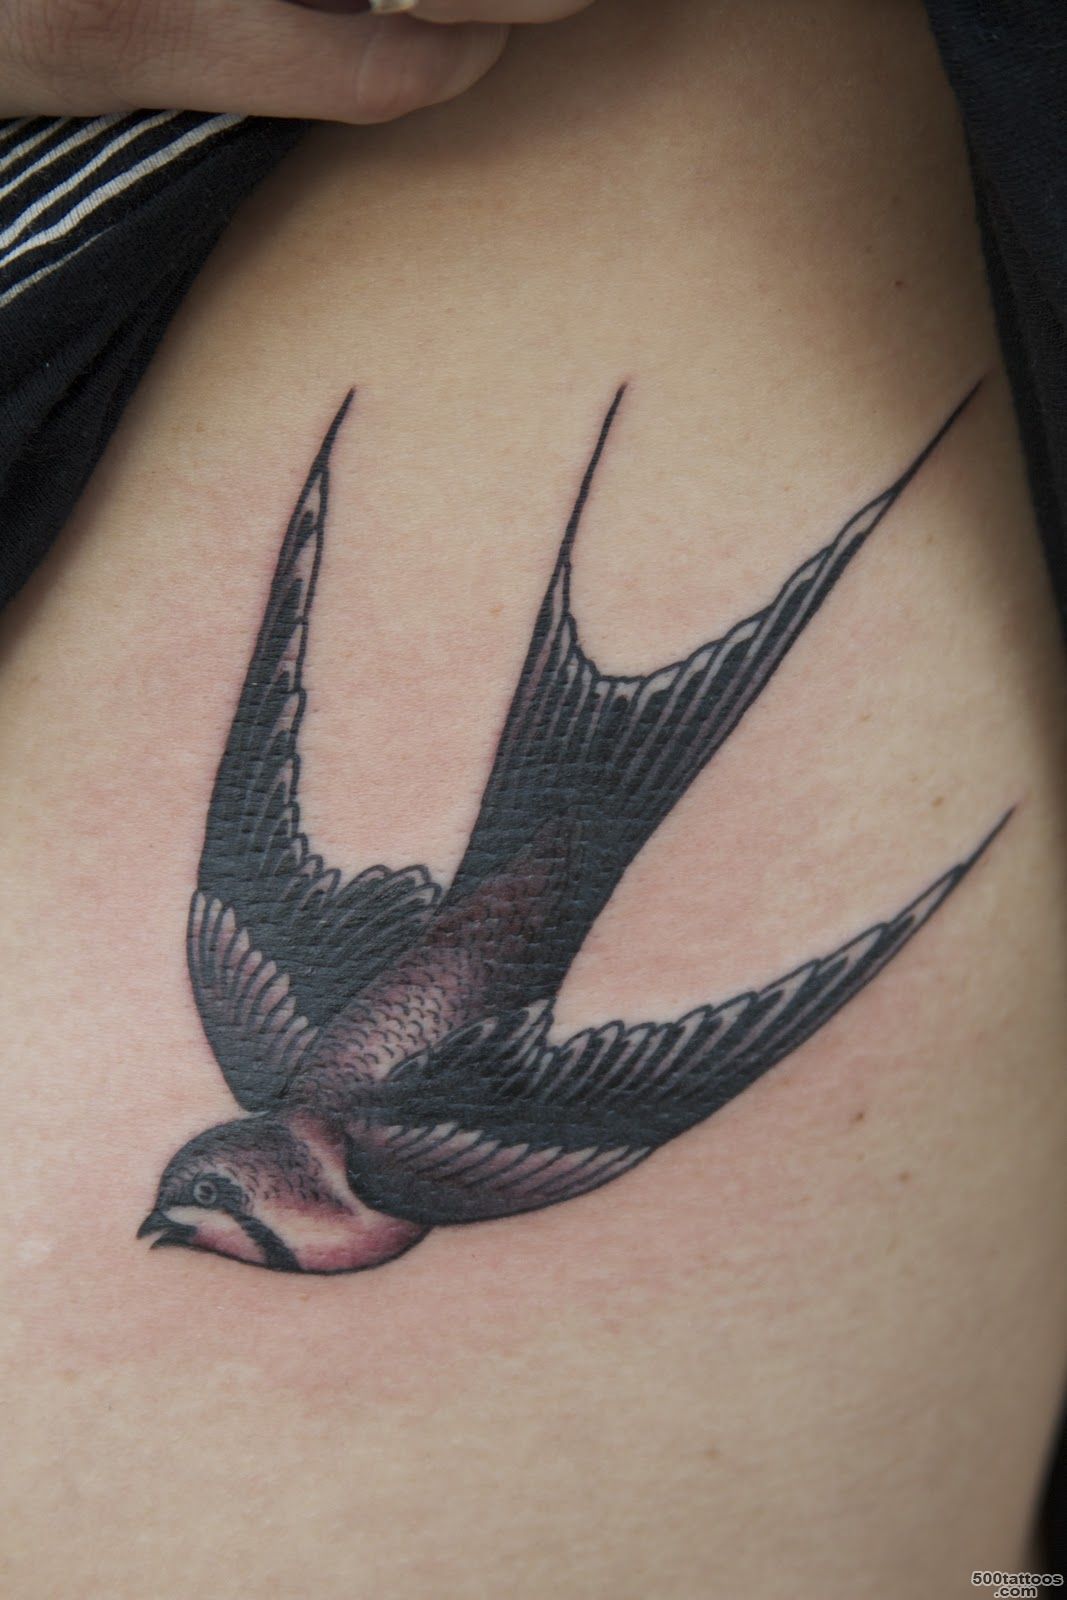 Cutest Swallow Tattoo Designs  Tattoo Ideas Gallery amp Designs ..._1